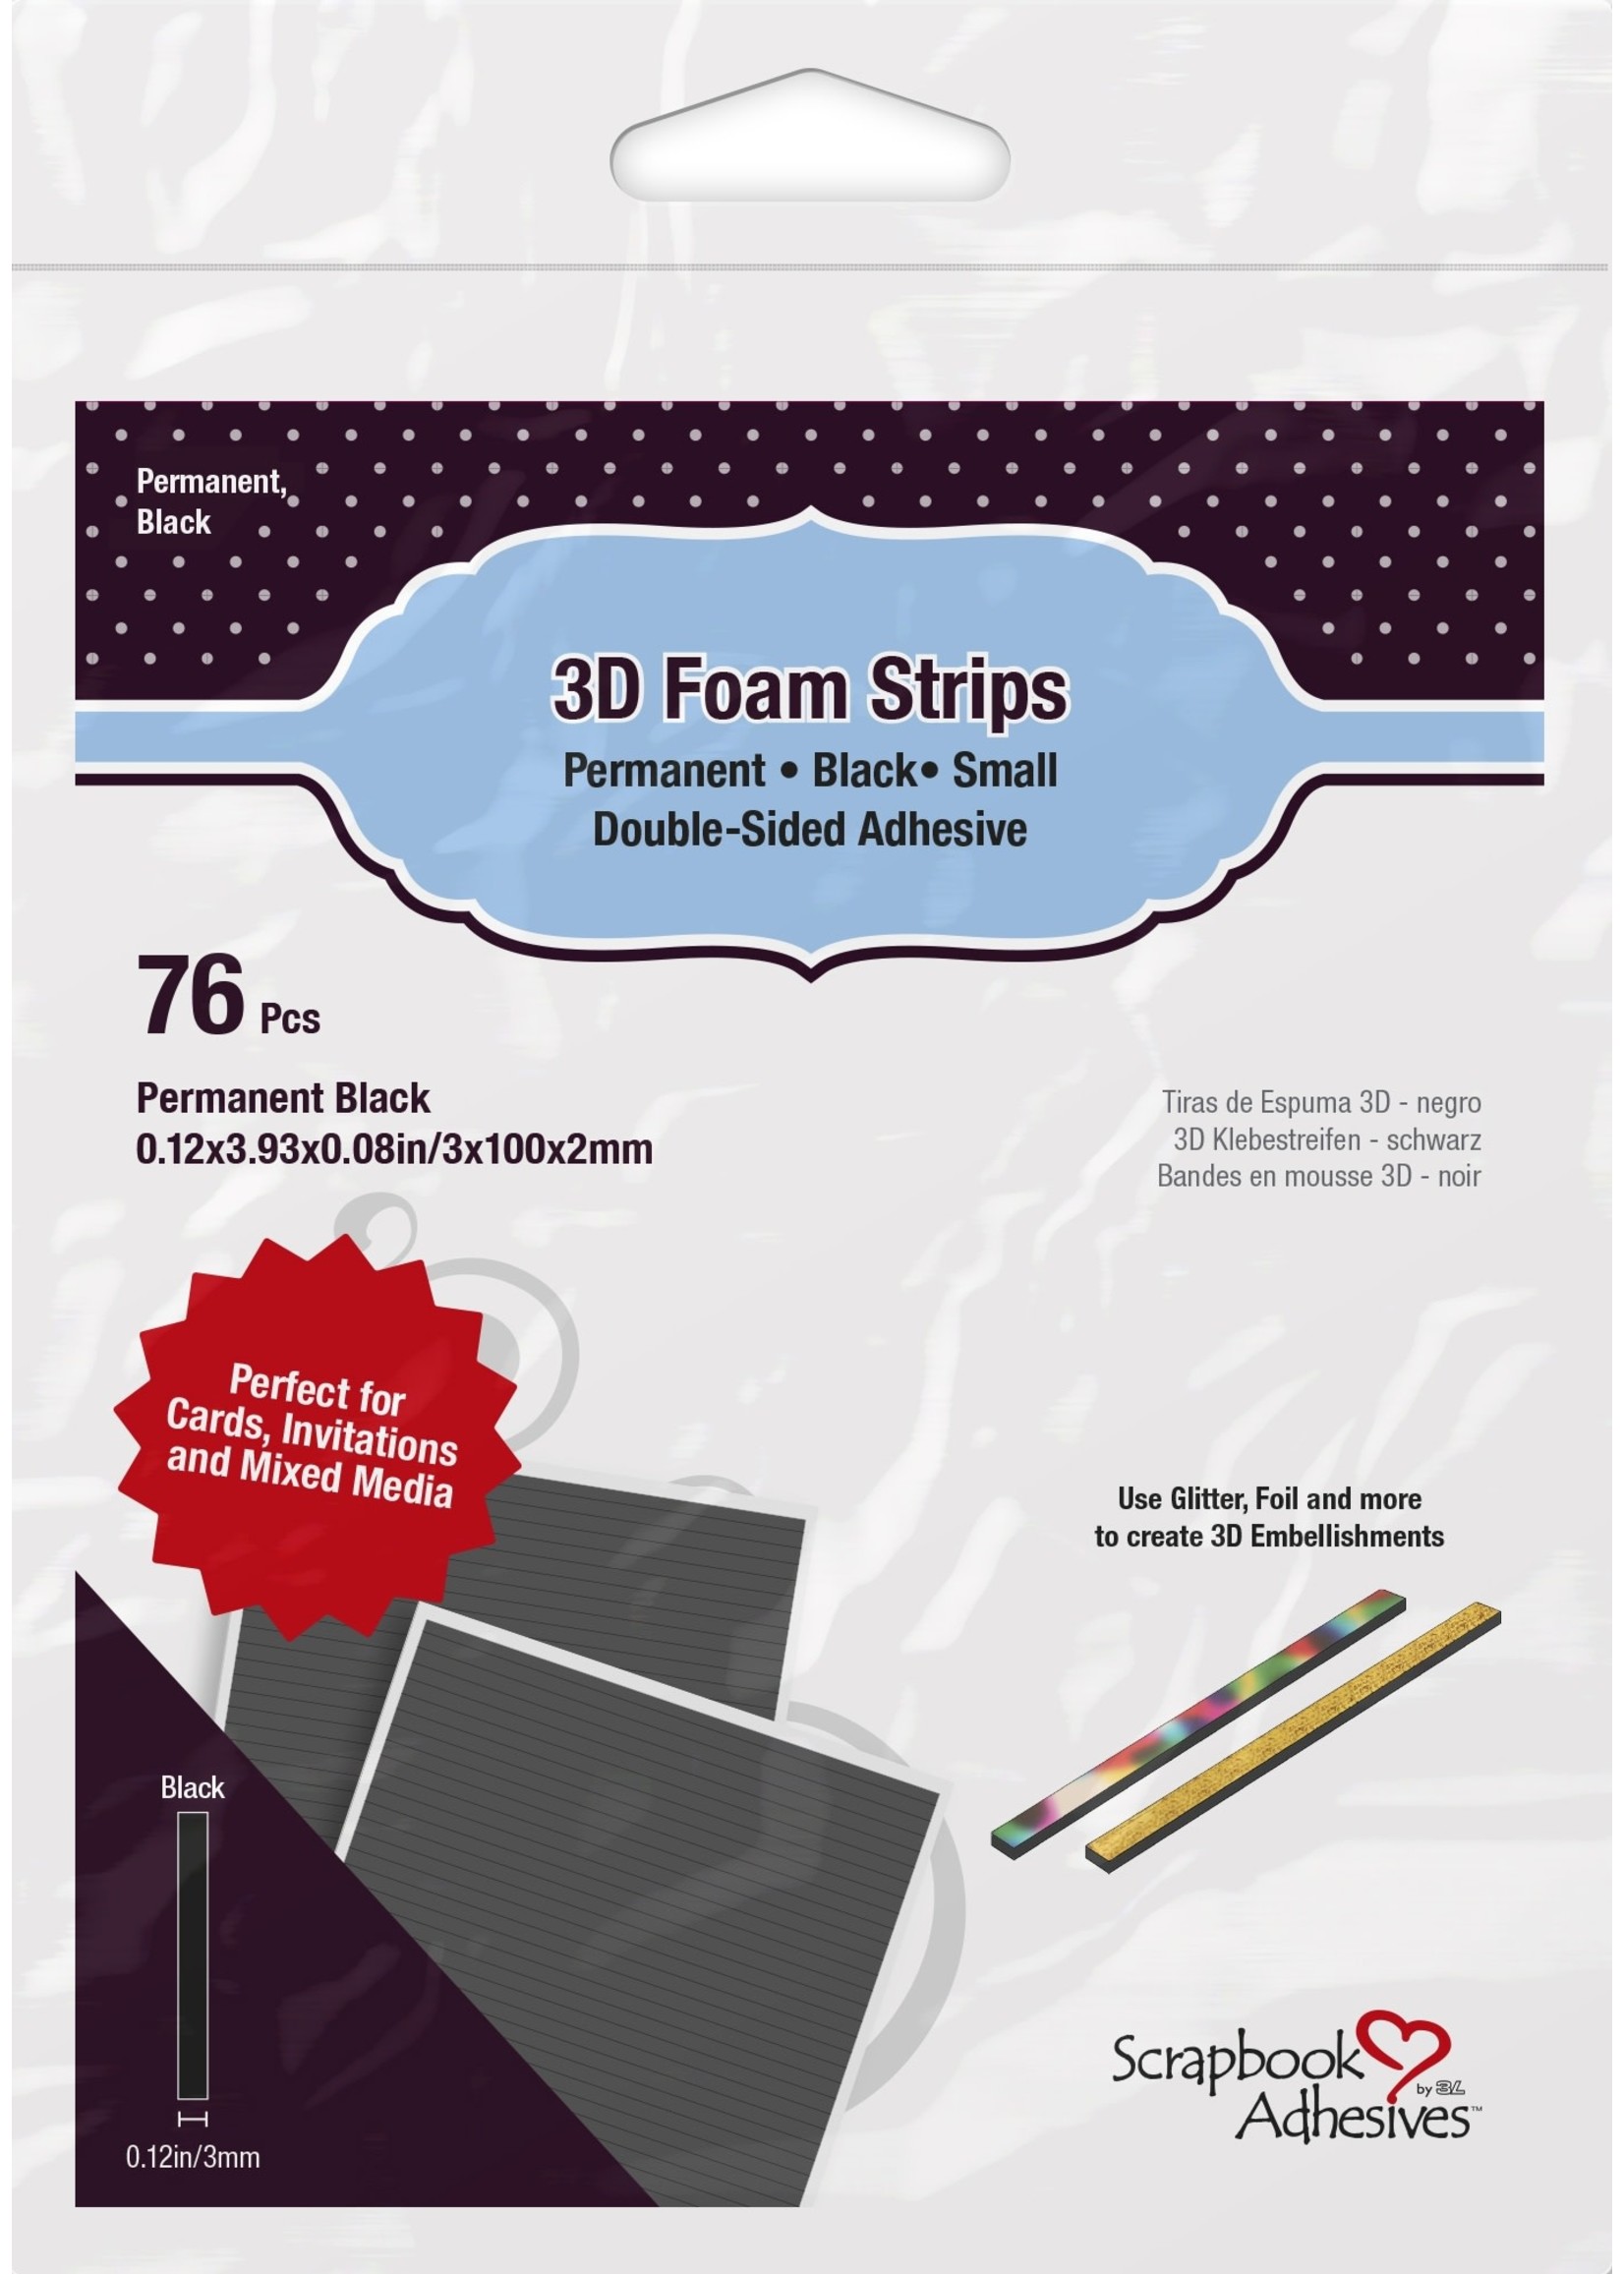 Scrapbook Adhesive SA 3D Foam Strips Black, Small